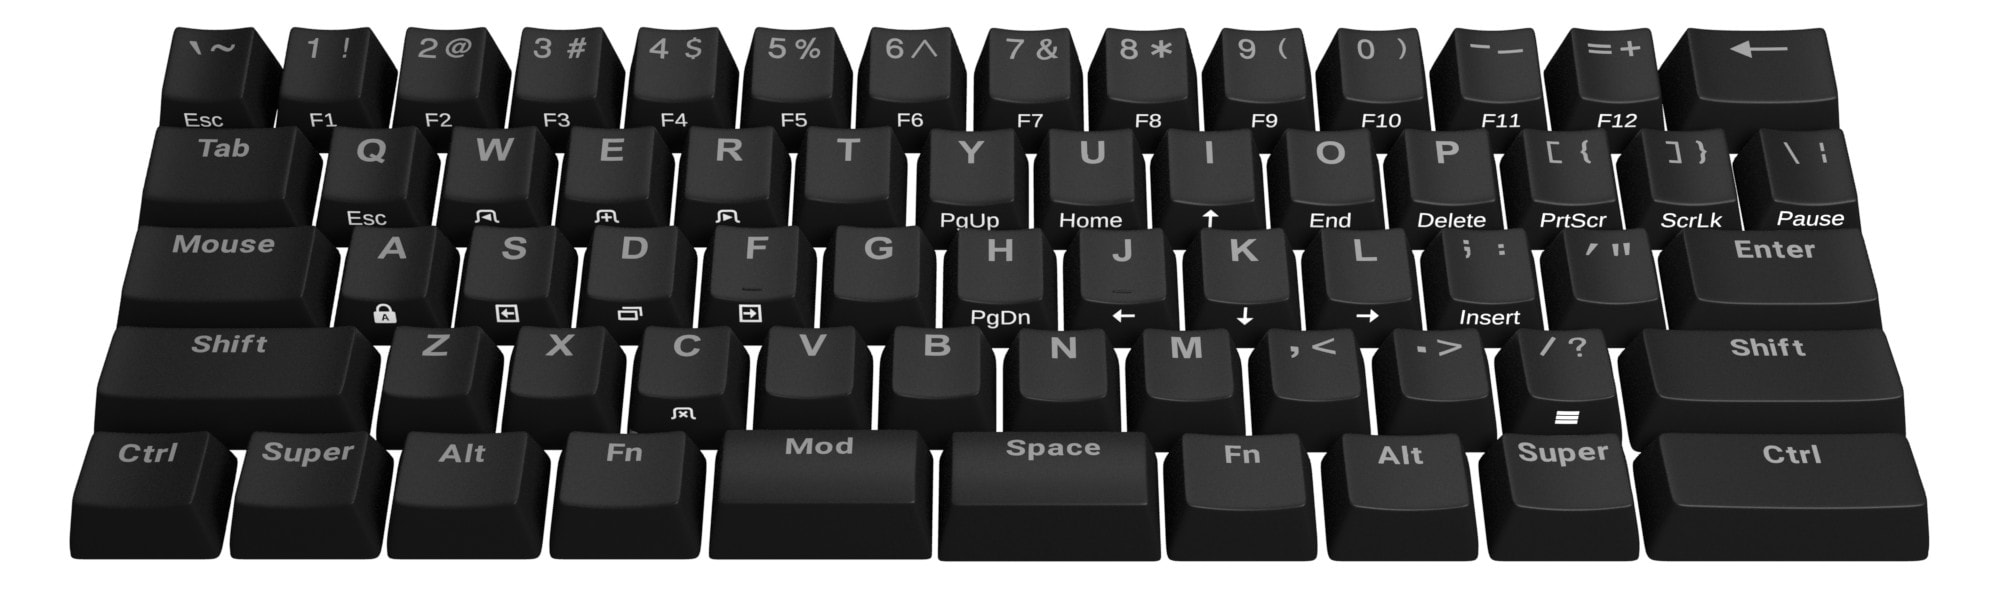 UHK 60 v2 Keycap Set – Ultimate Hacking Keyboard